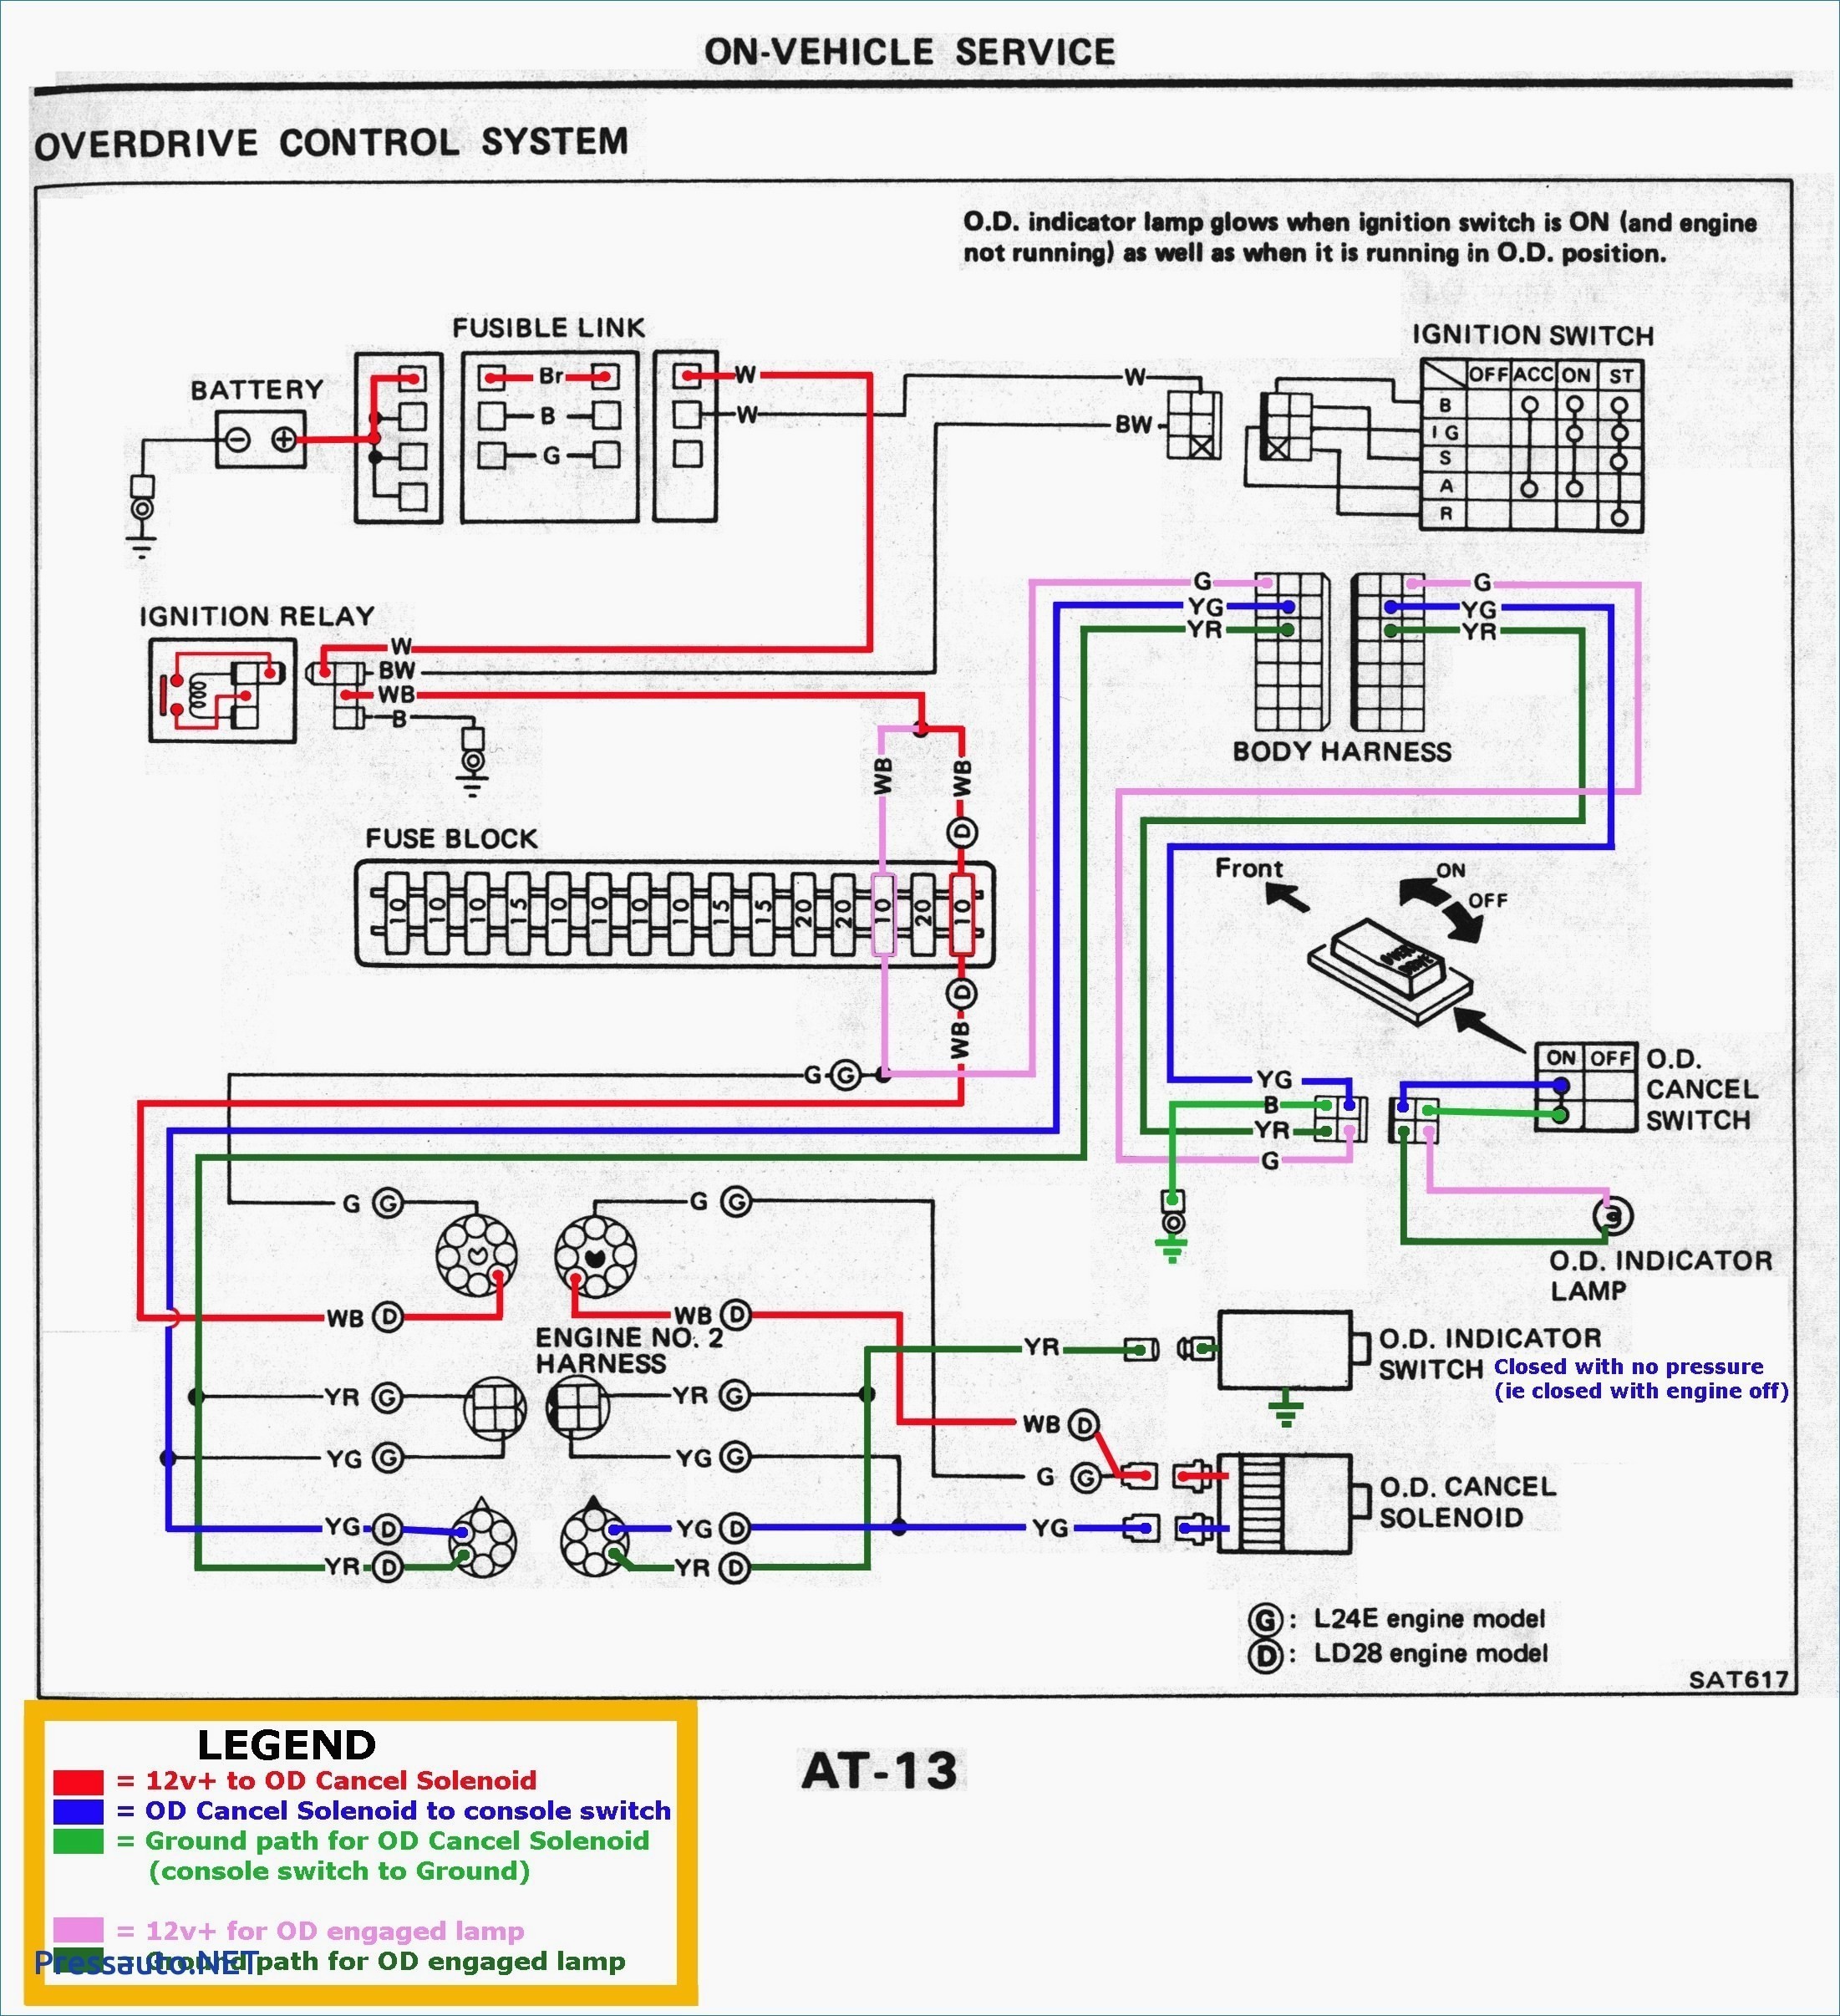 Ignition Switch Wiring Diagram Honda Civic Refrence Valid Ignition Switch Wiring Diagram Honda